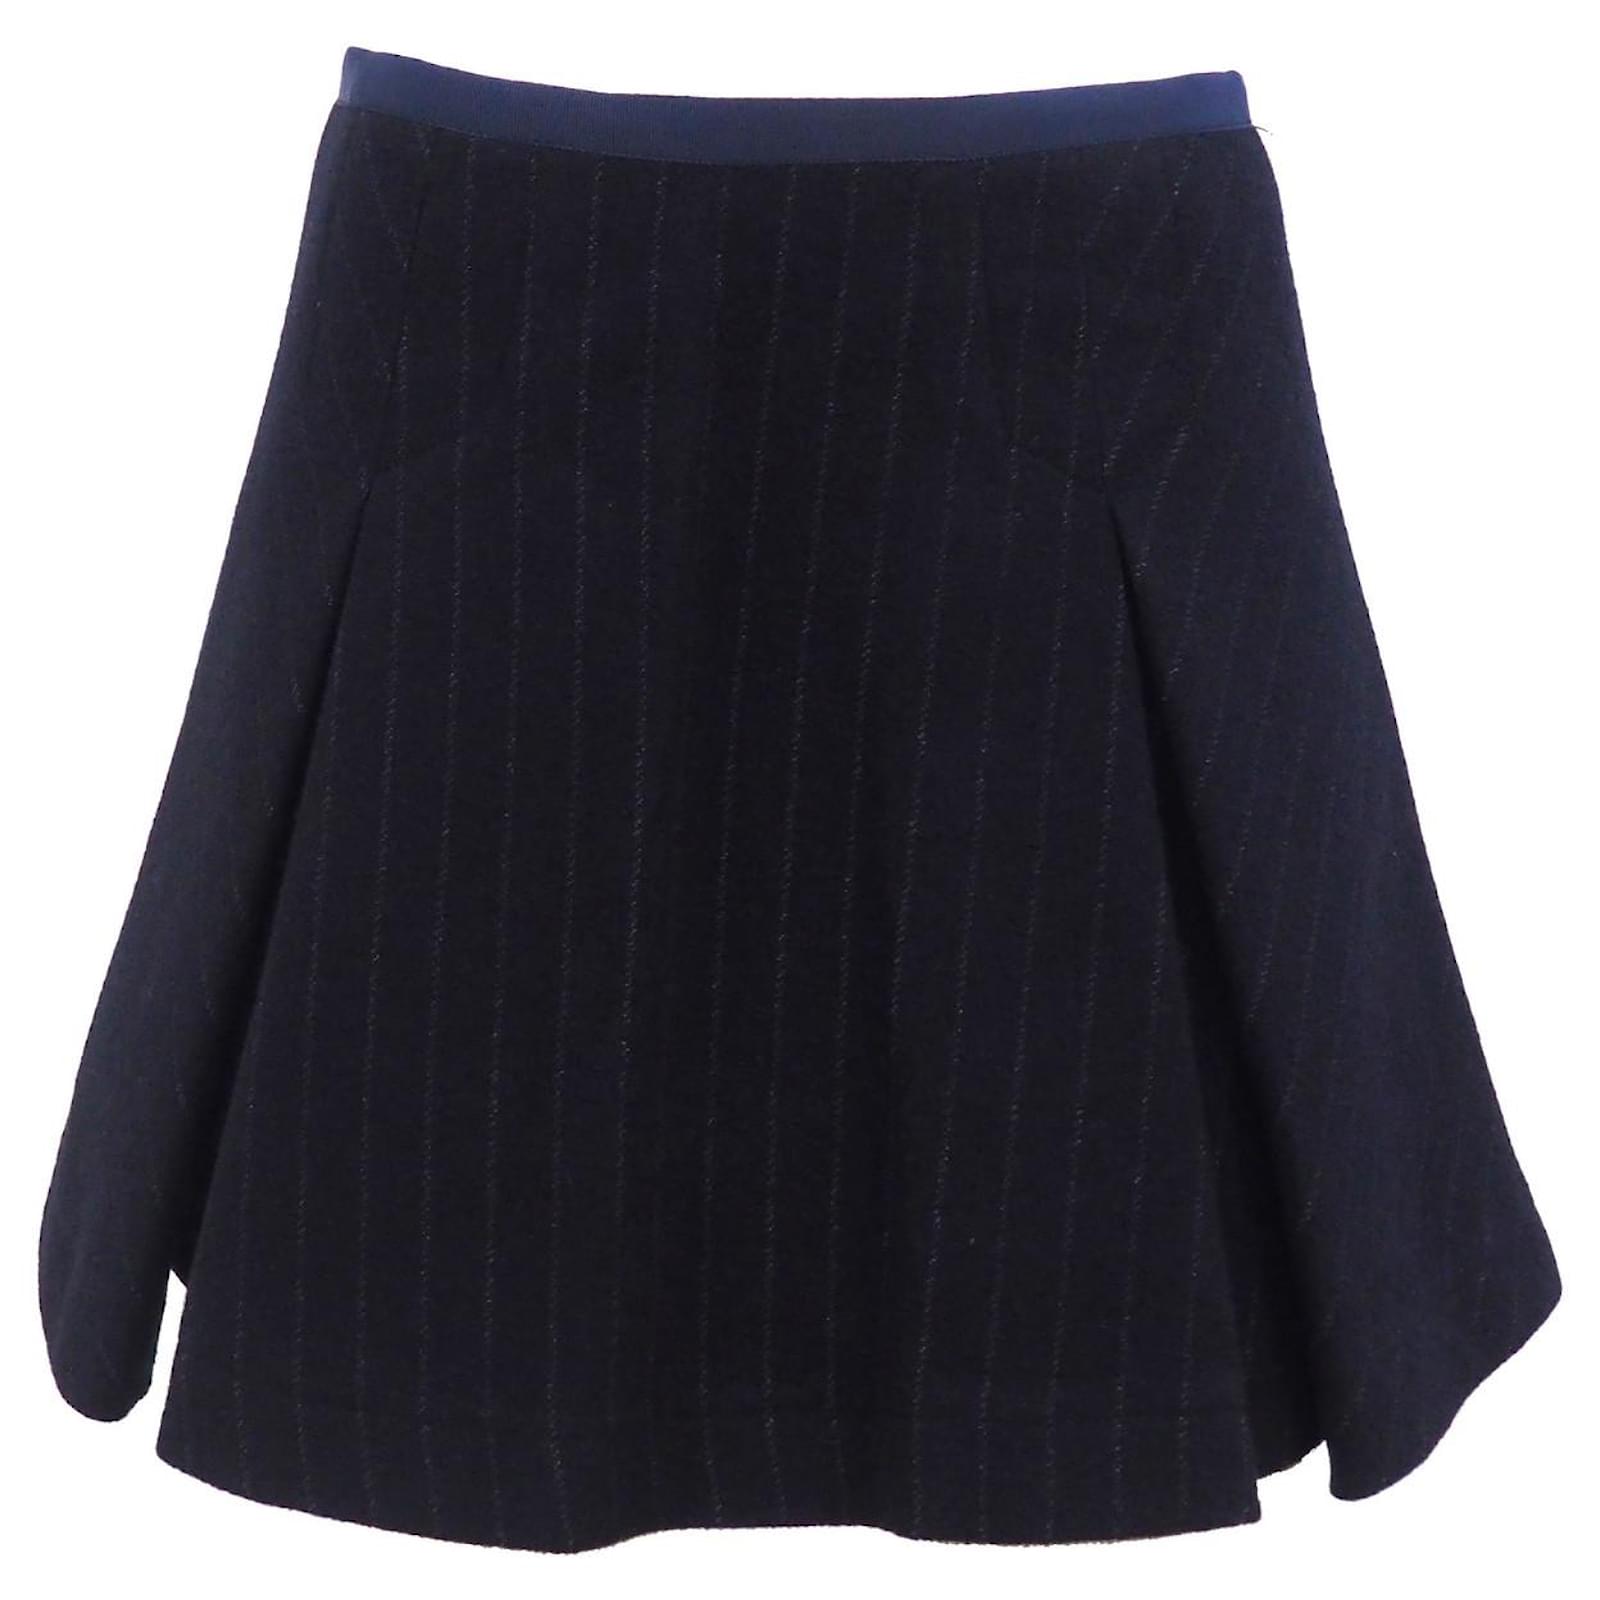 Sacai Luck pinstripe mini skirt in navy blue Polyester Wool Nylon